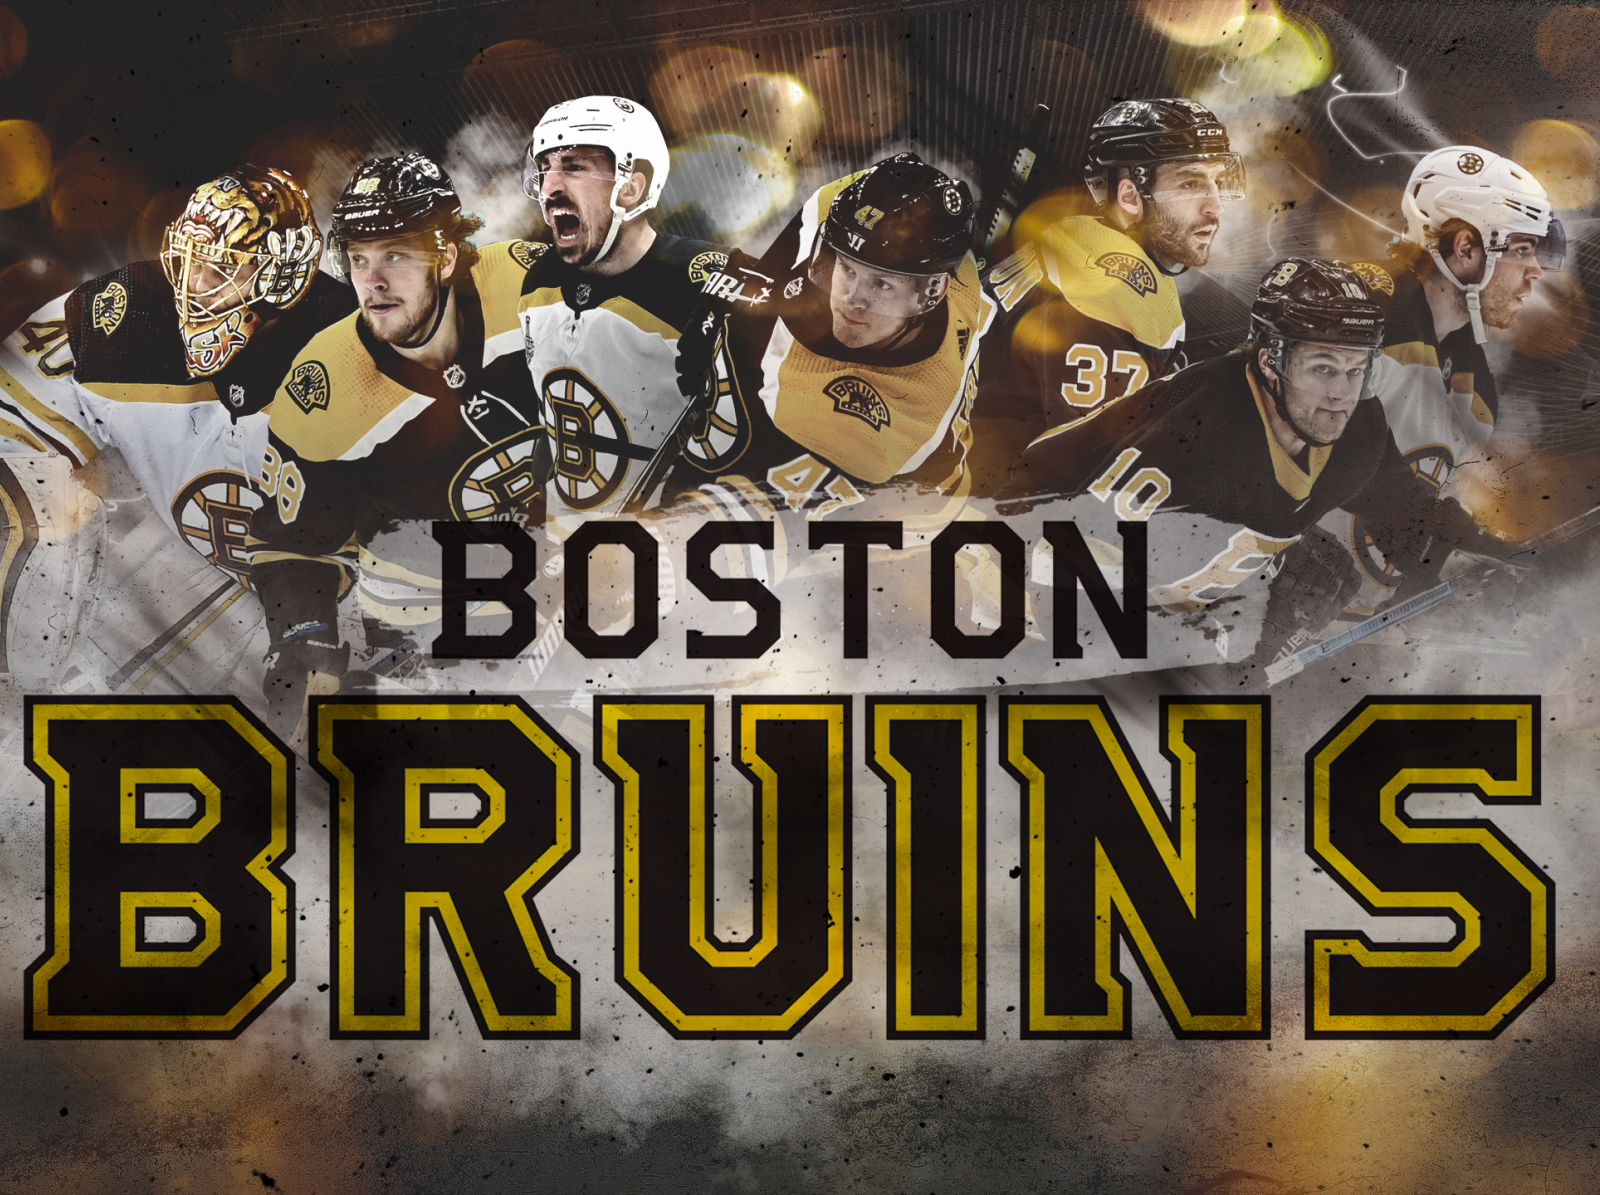 Boston Bruins Wallpapers - Wallpaper Cave